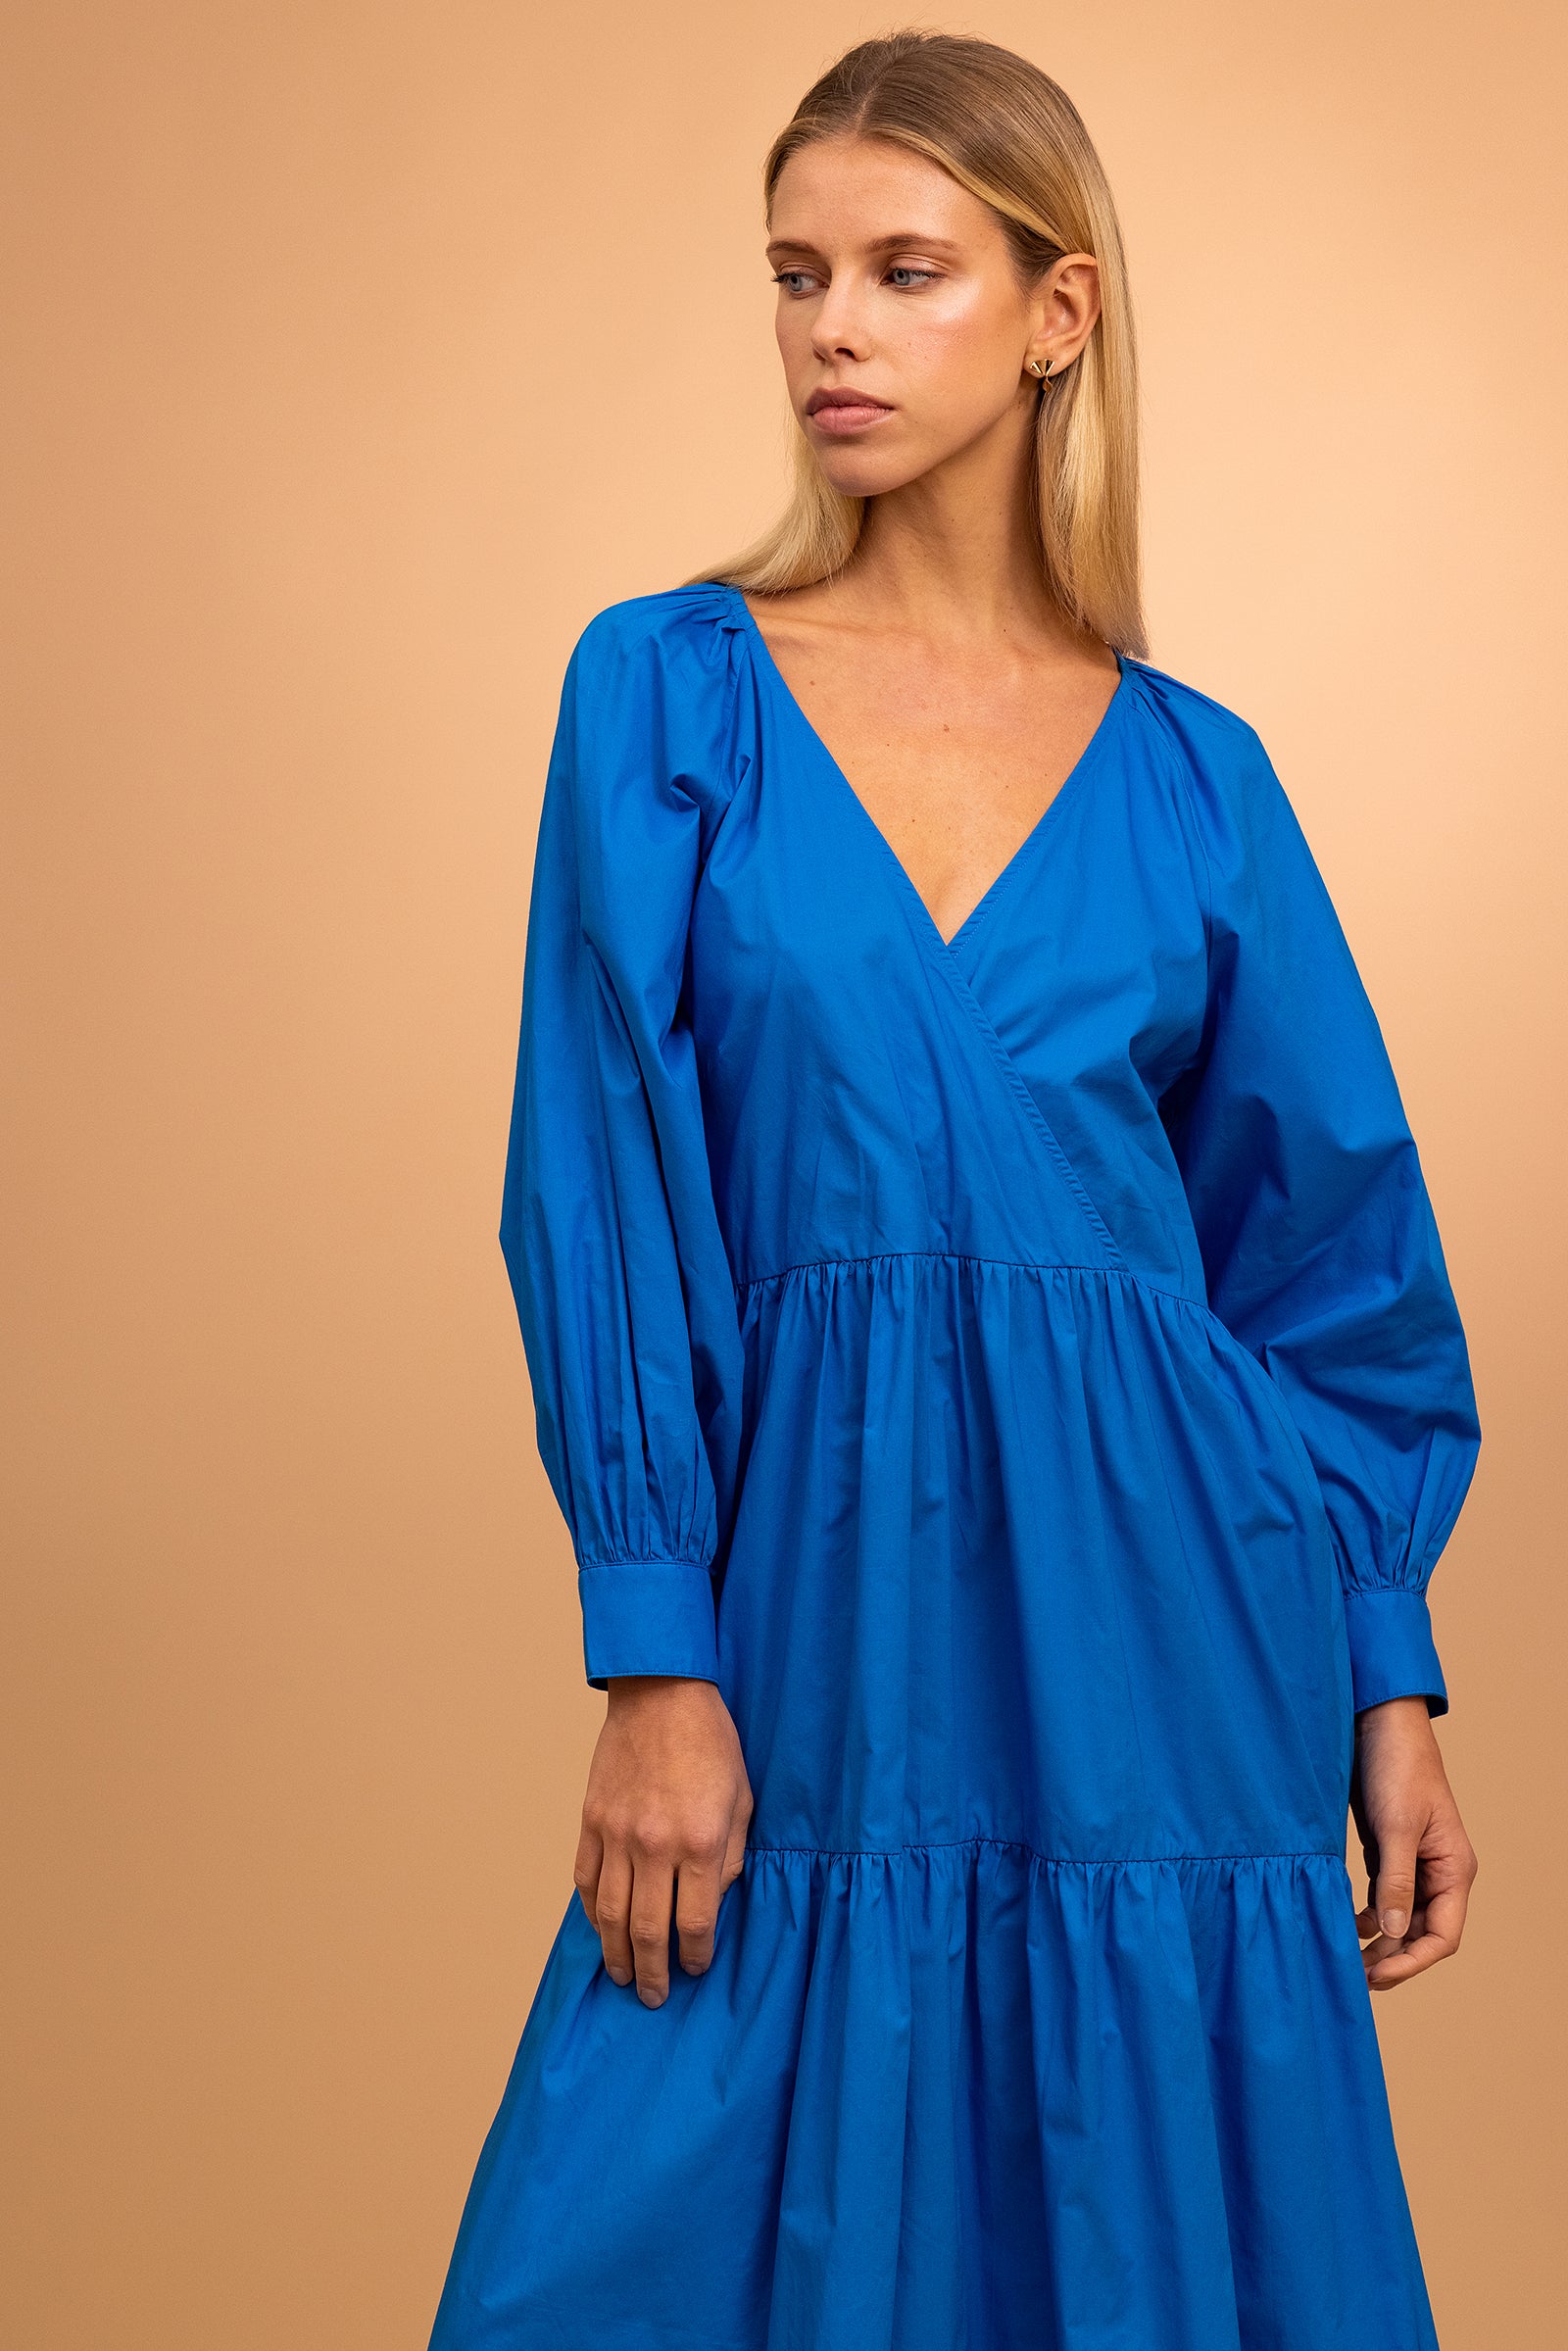 Dress Riva Bleu woman femininity softness summer elegance sobriety lightness design misericordia lima peru